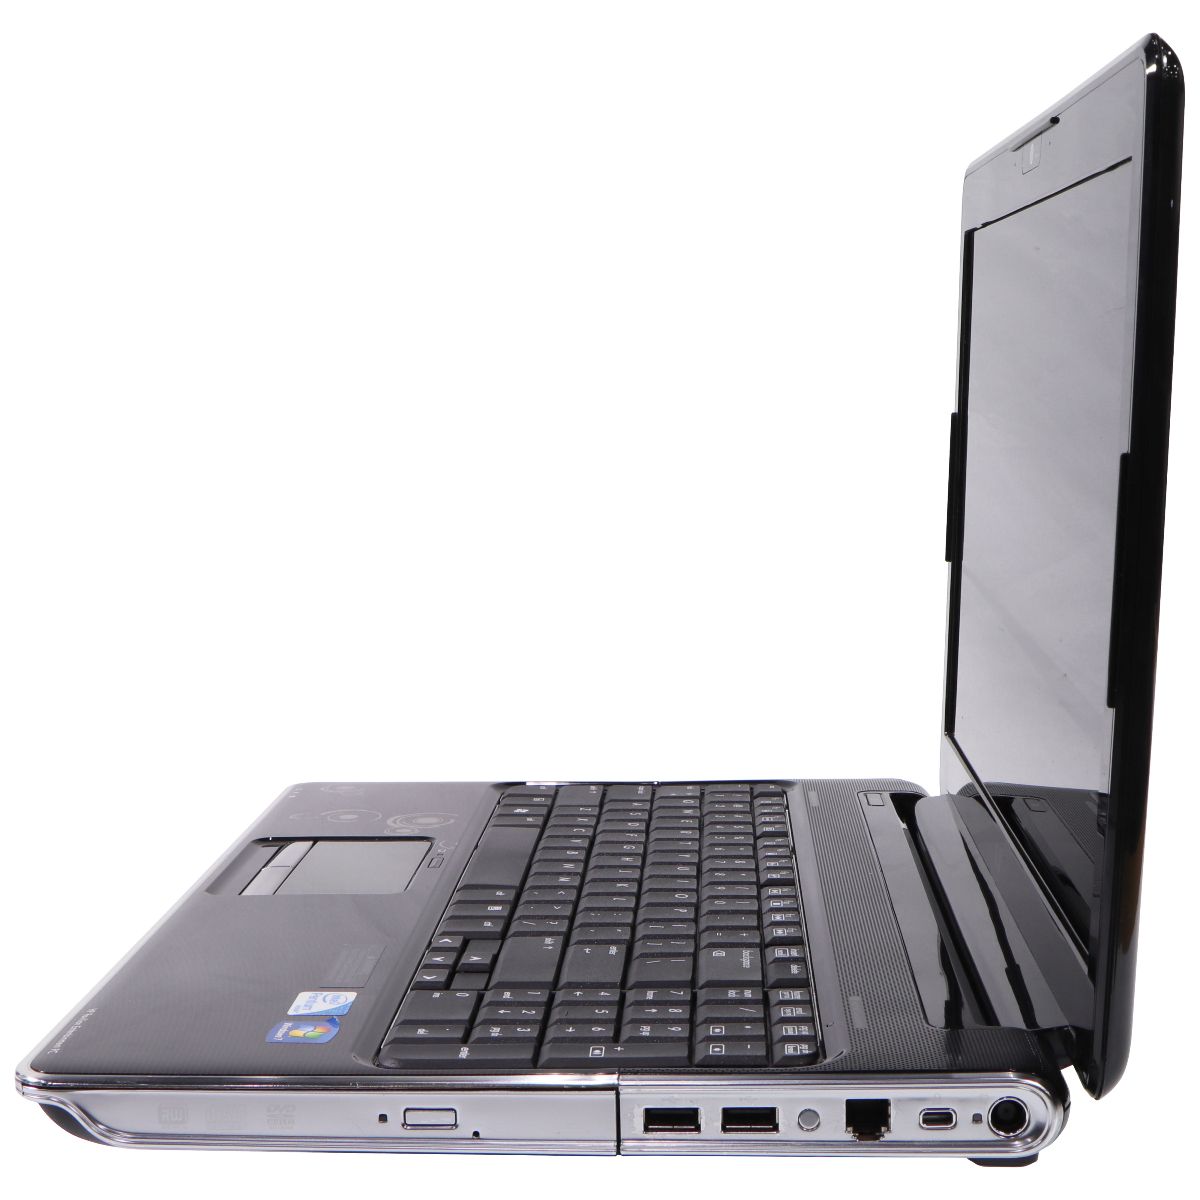 HP Pavilion (15.6-in) Laptop (DV6-2141ee) i5-430M/500GB/4GB/10 Home - Black Laptops - PC Laptops & Netbooks HP    - Simple Cell Bulk Wholesale Pricing - USA Seller